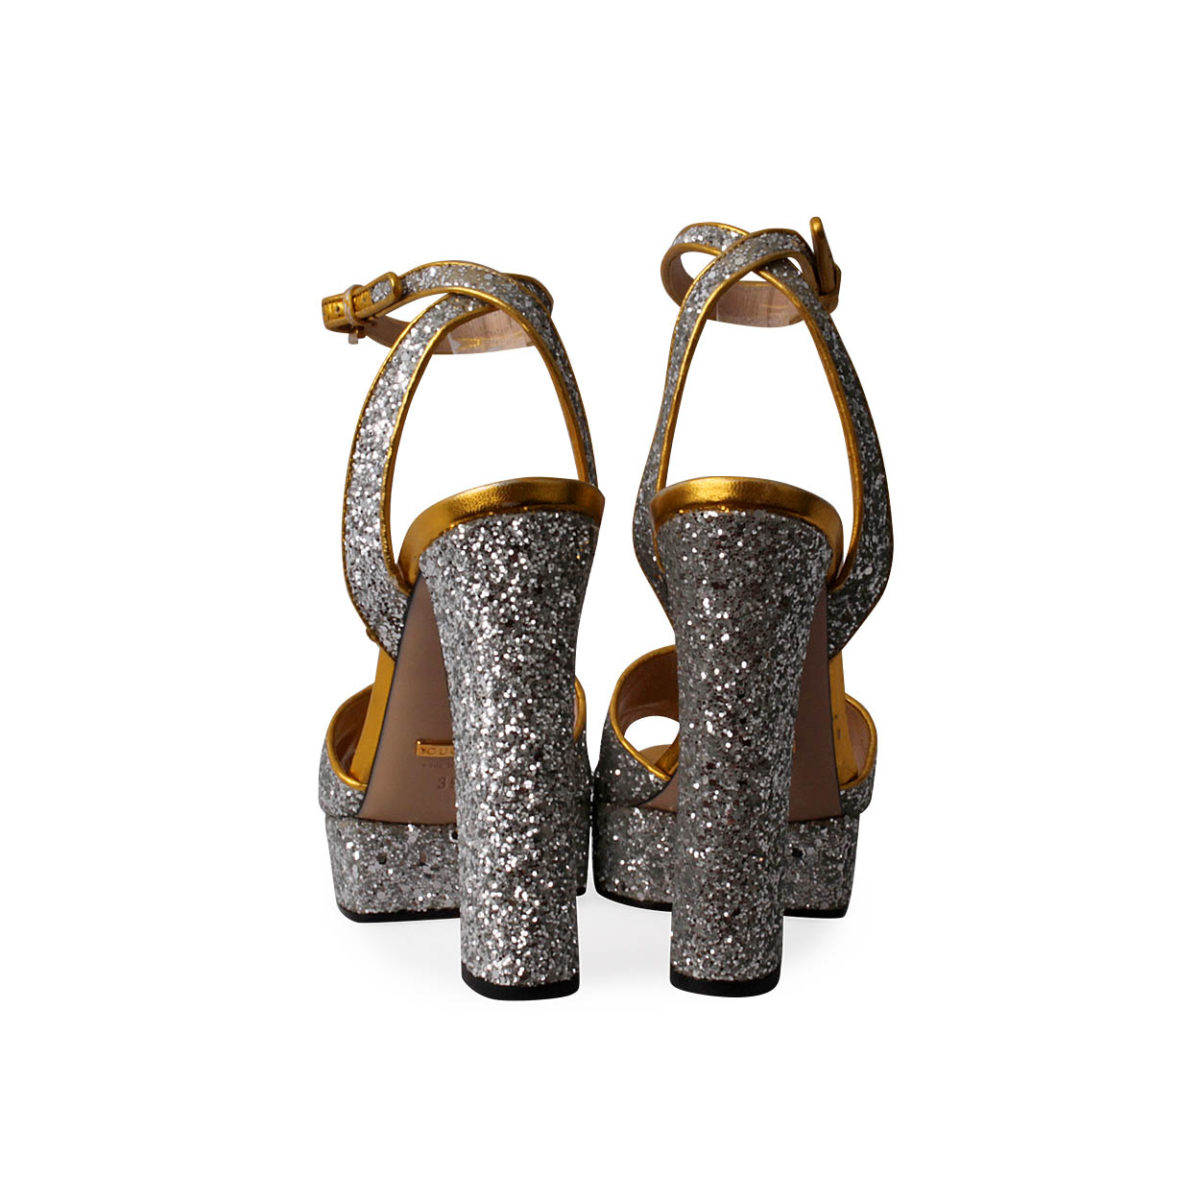 gucci silver platform sandals